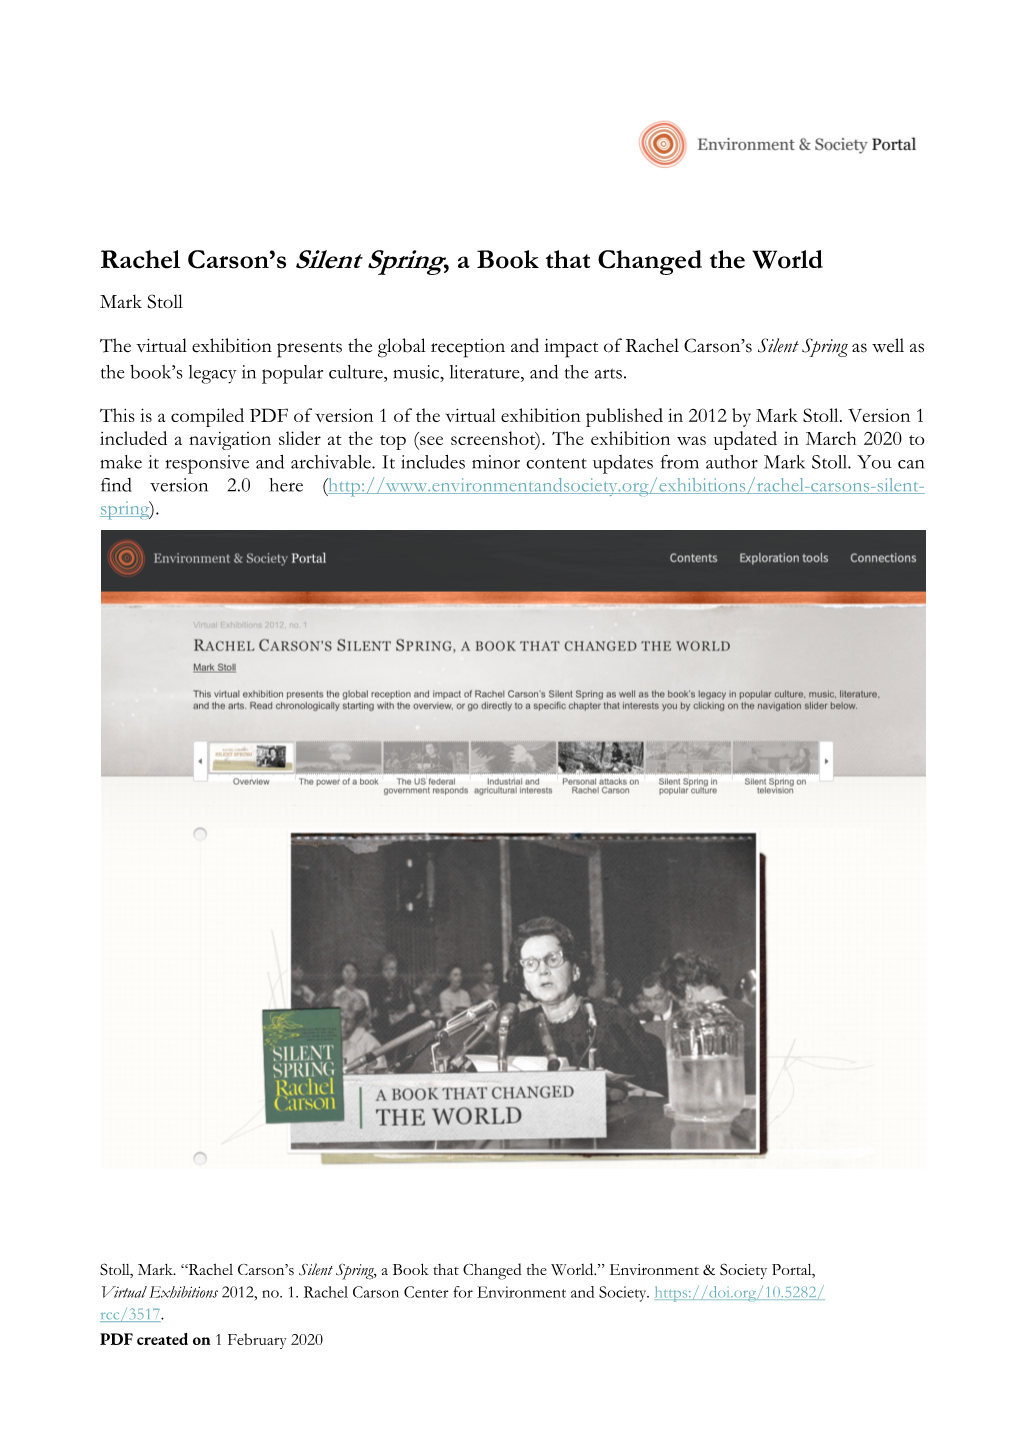 Rachel Carson's Silent Spring, a Book That